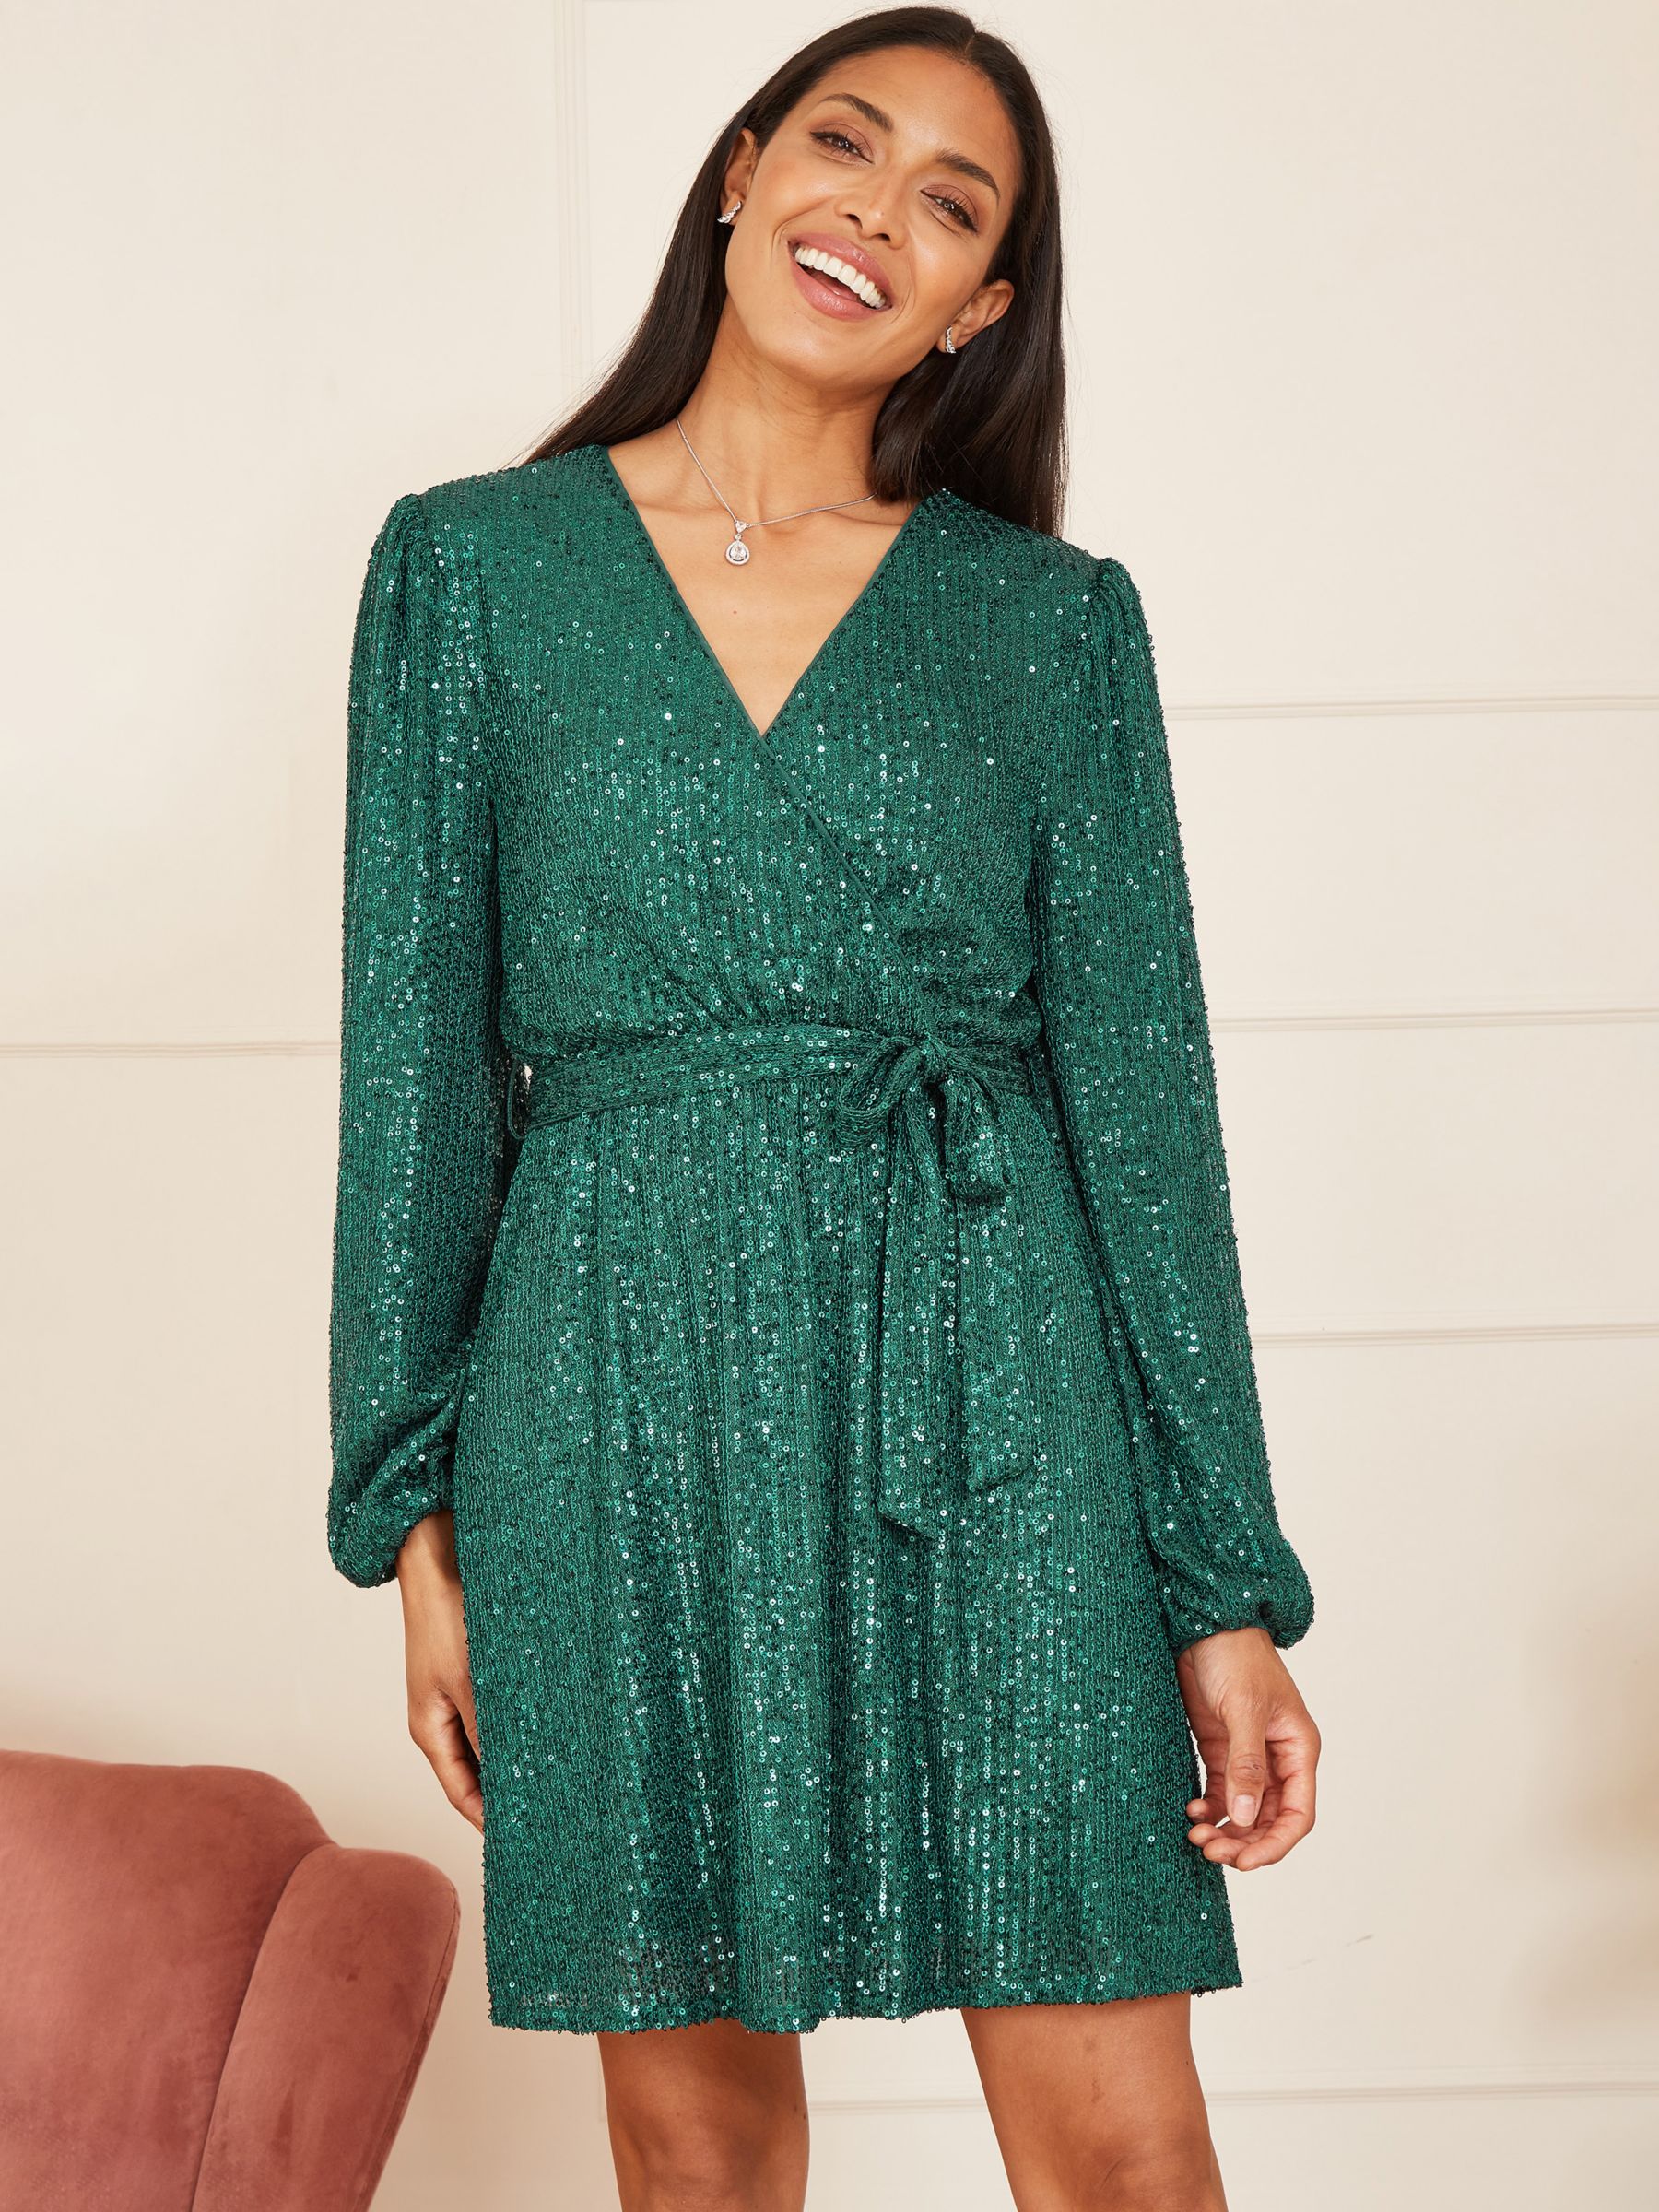 Mela London Sequin Belted Wrap Dress, Green, 8